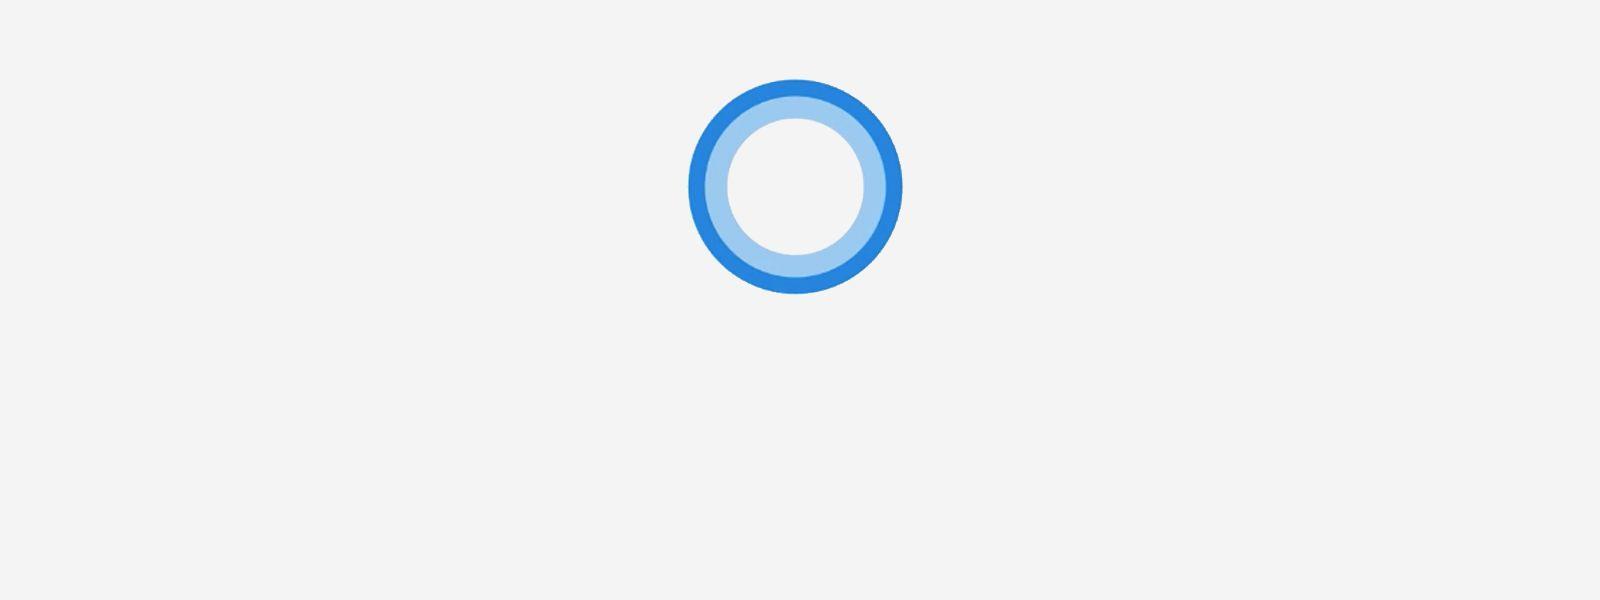 Microsoft Cortana Logo - Personal Digital Assistant - Cortana Home Assistant - Microsoft